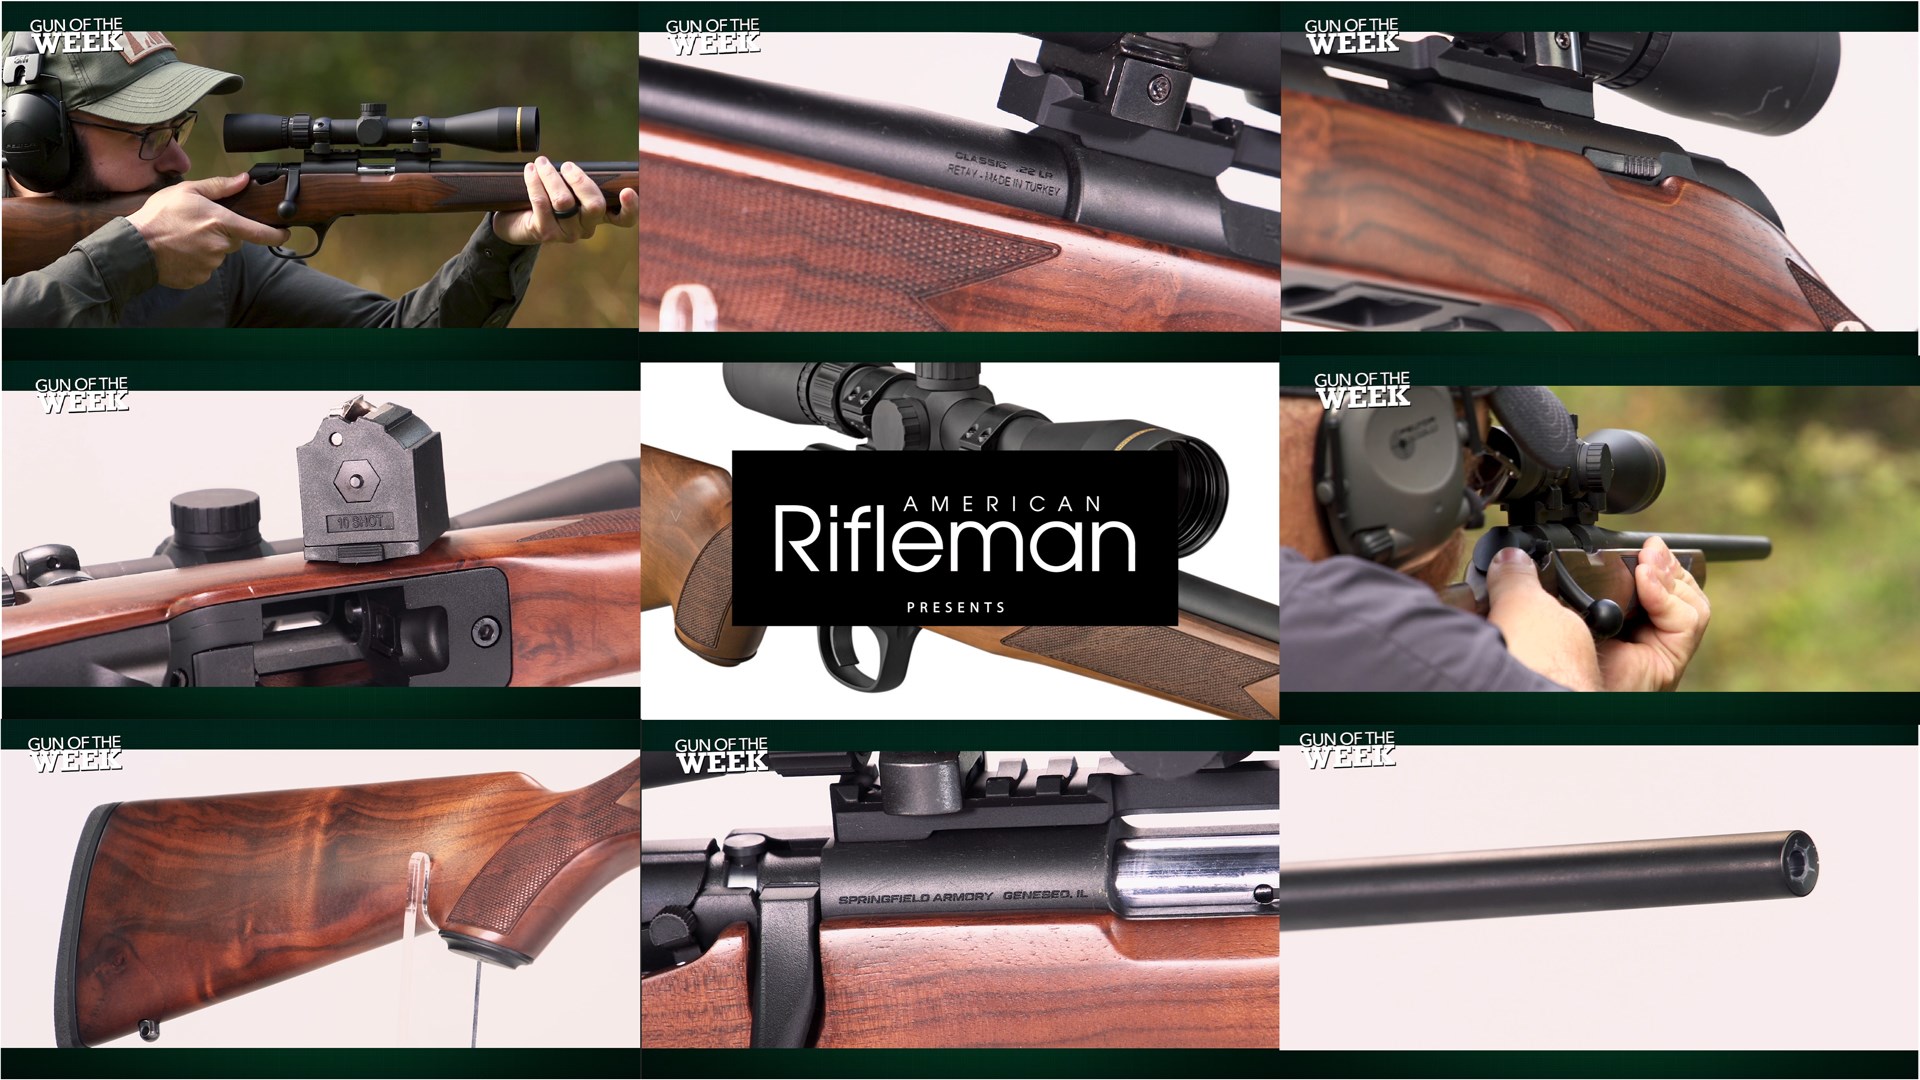 Springfield Armory Model 2020 Rimfire rifle tiles arrangement 9 images gun parts men shooting text on image noting AMERICAN RIFLEMAN PRESENTS